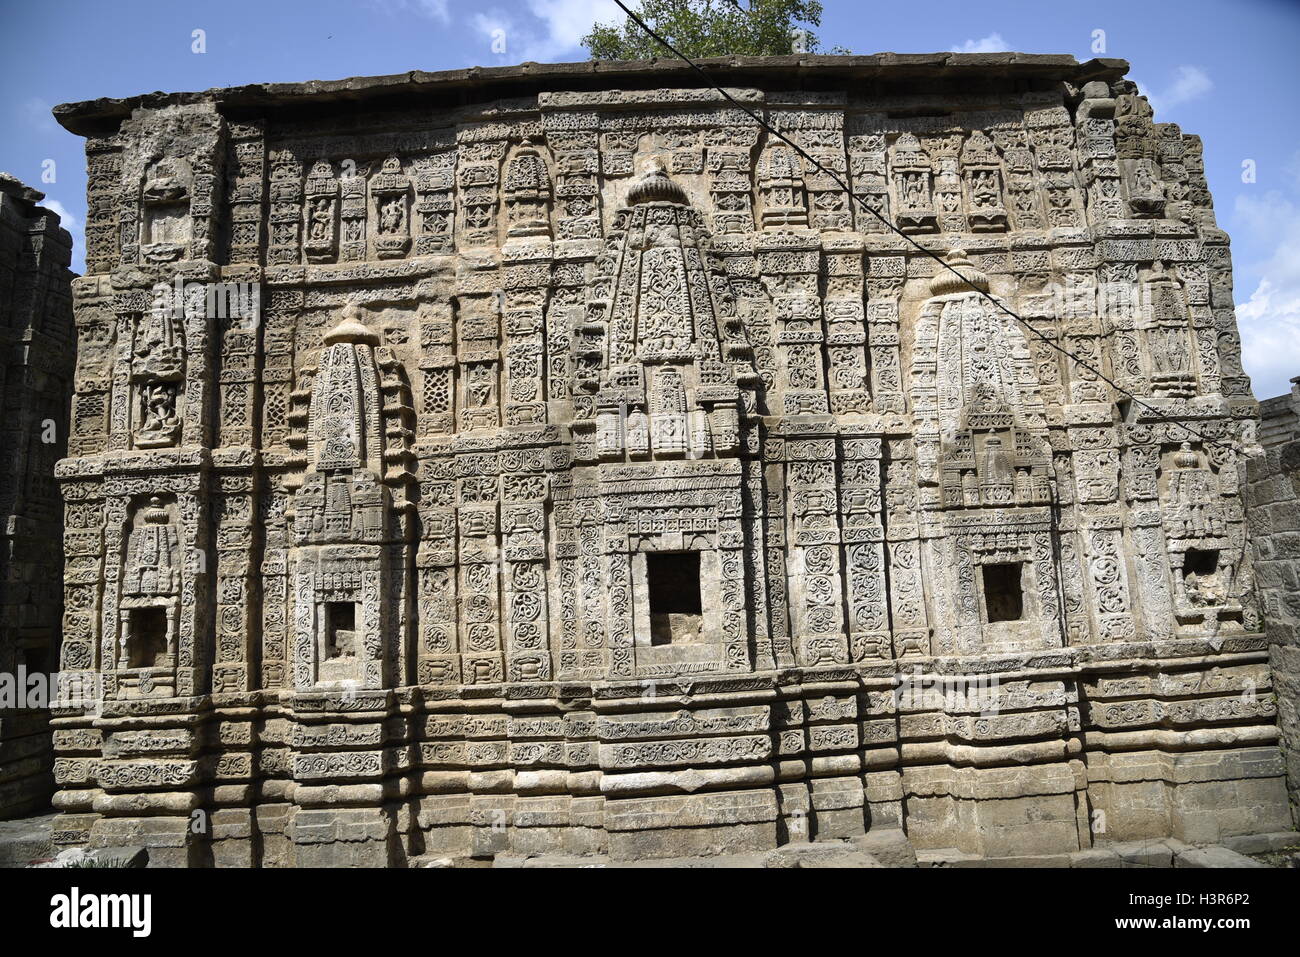 Laxmi Narayan Temple, Kangra Fort, Dharamsala, en las afueras de Kangra, India. Foto de stock